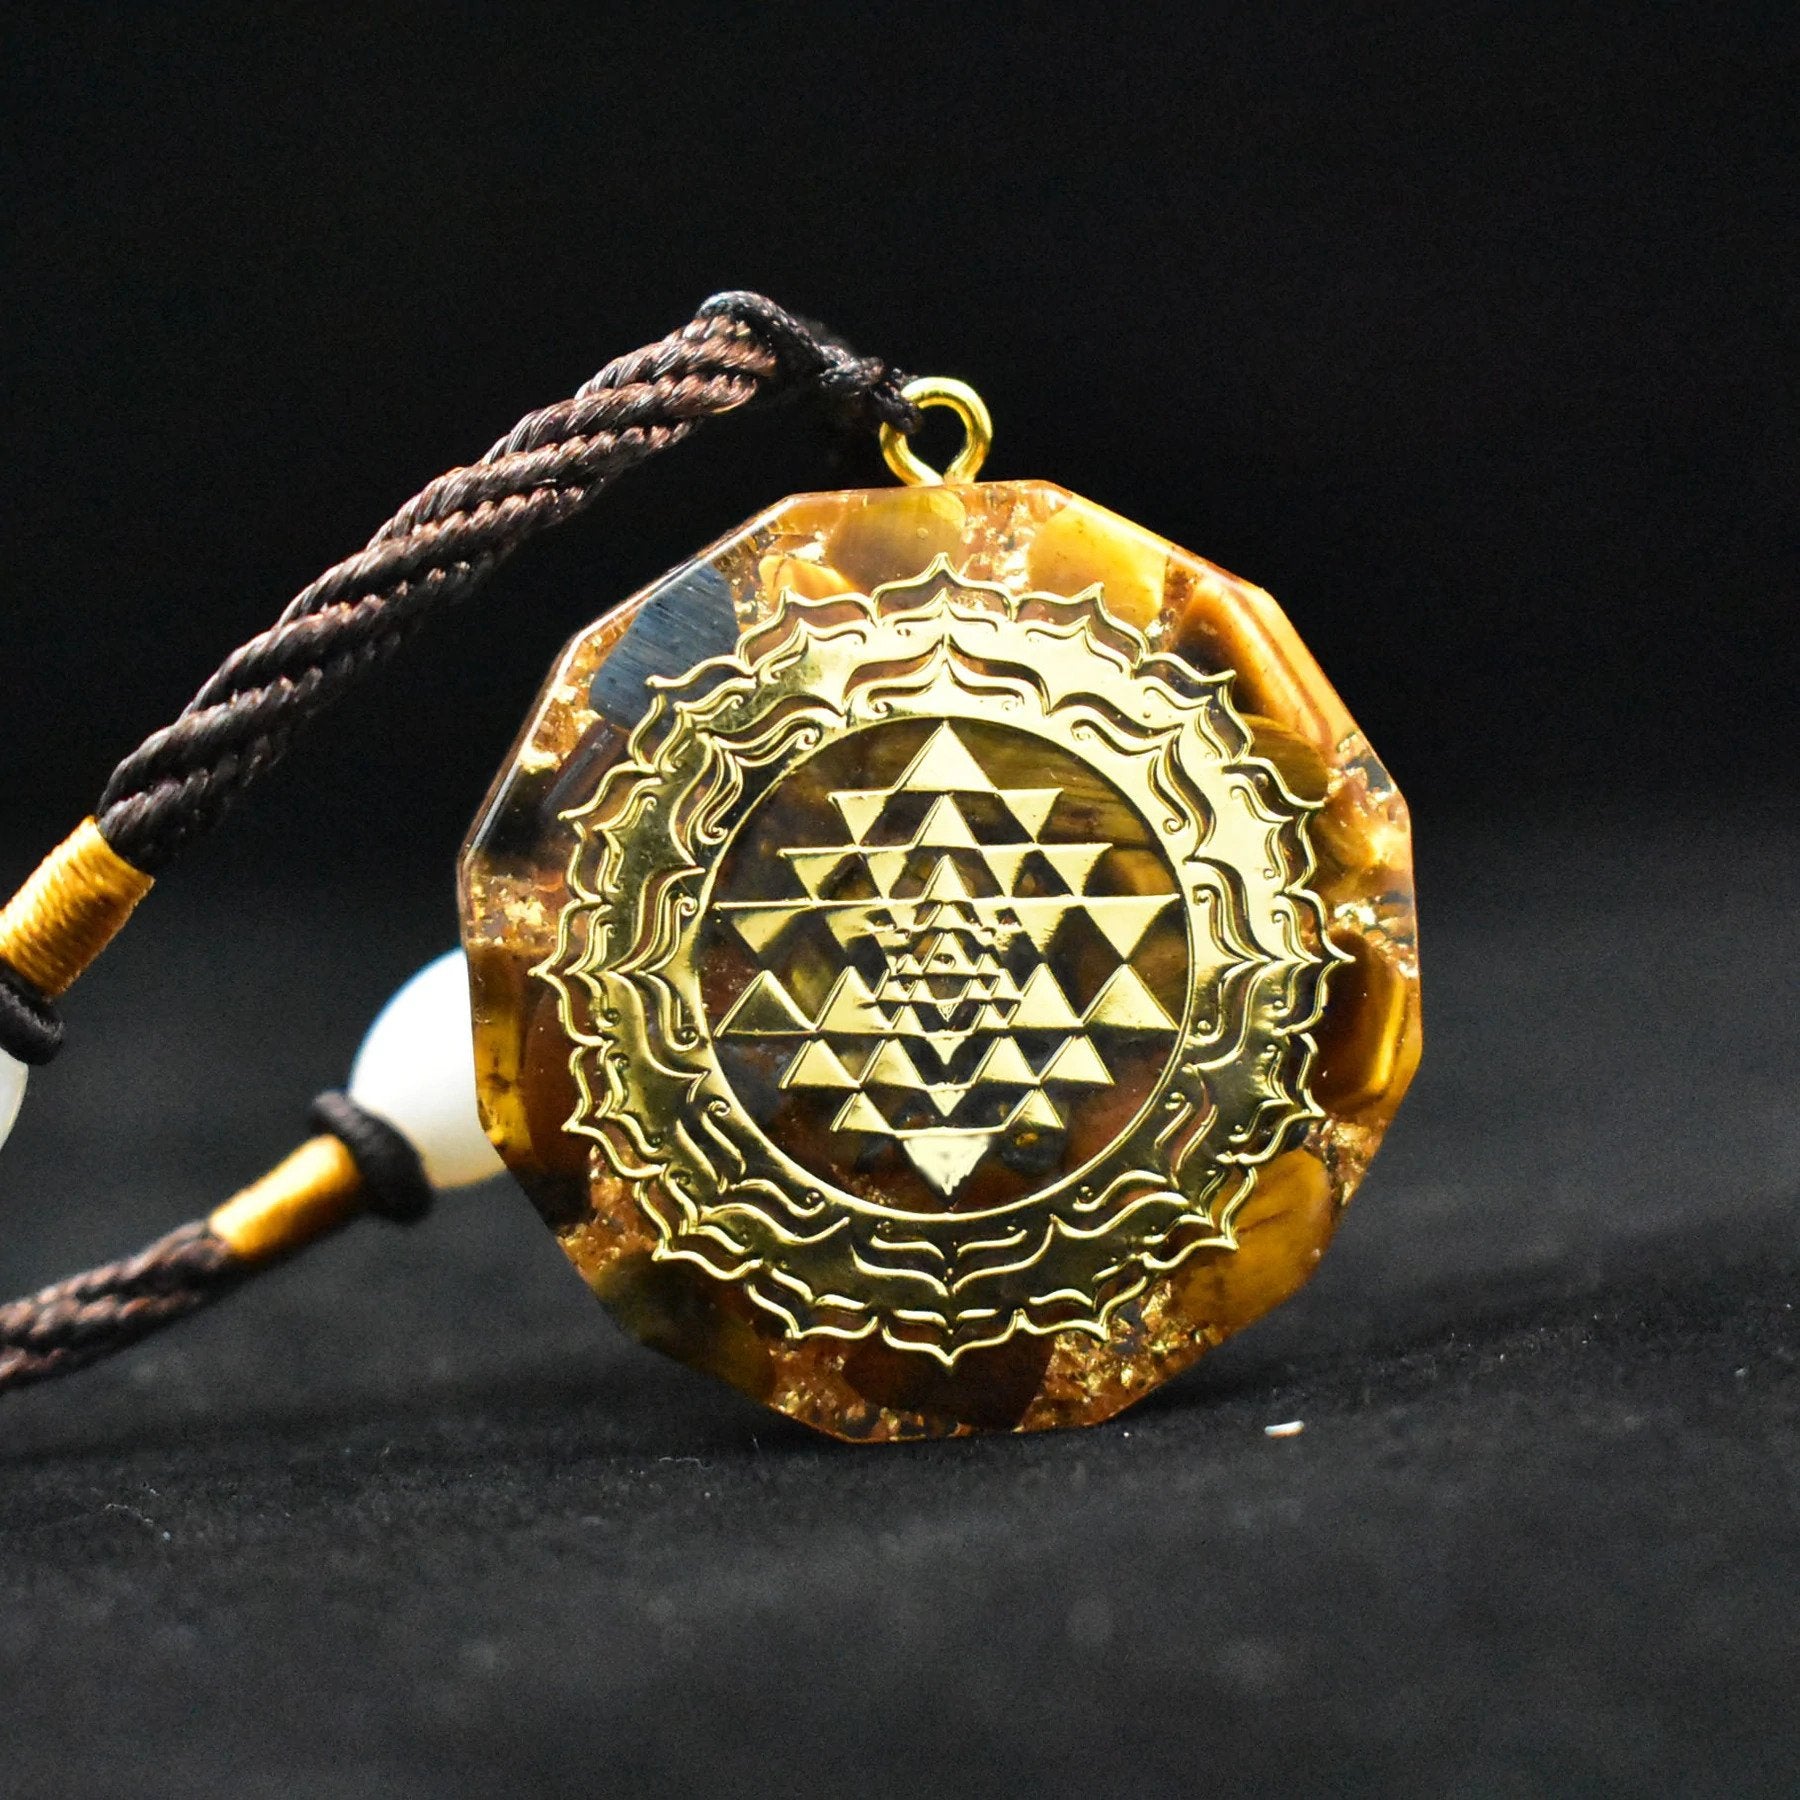 Sacred Sri Yantra Necklace Buddhist Pendant - 6 Lynx - Sound Healing